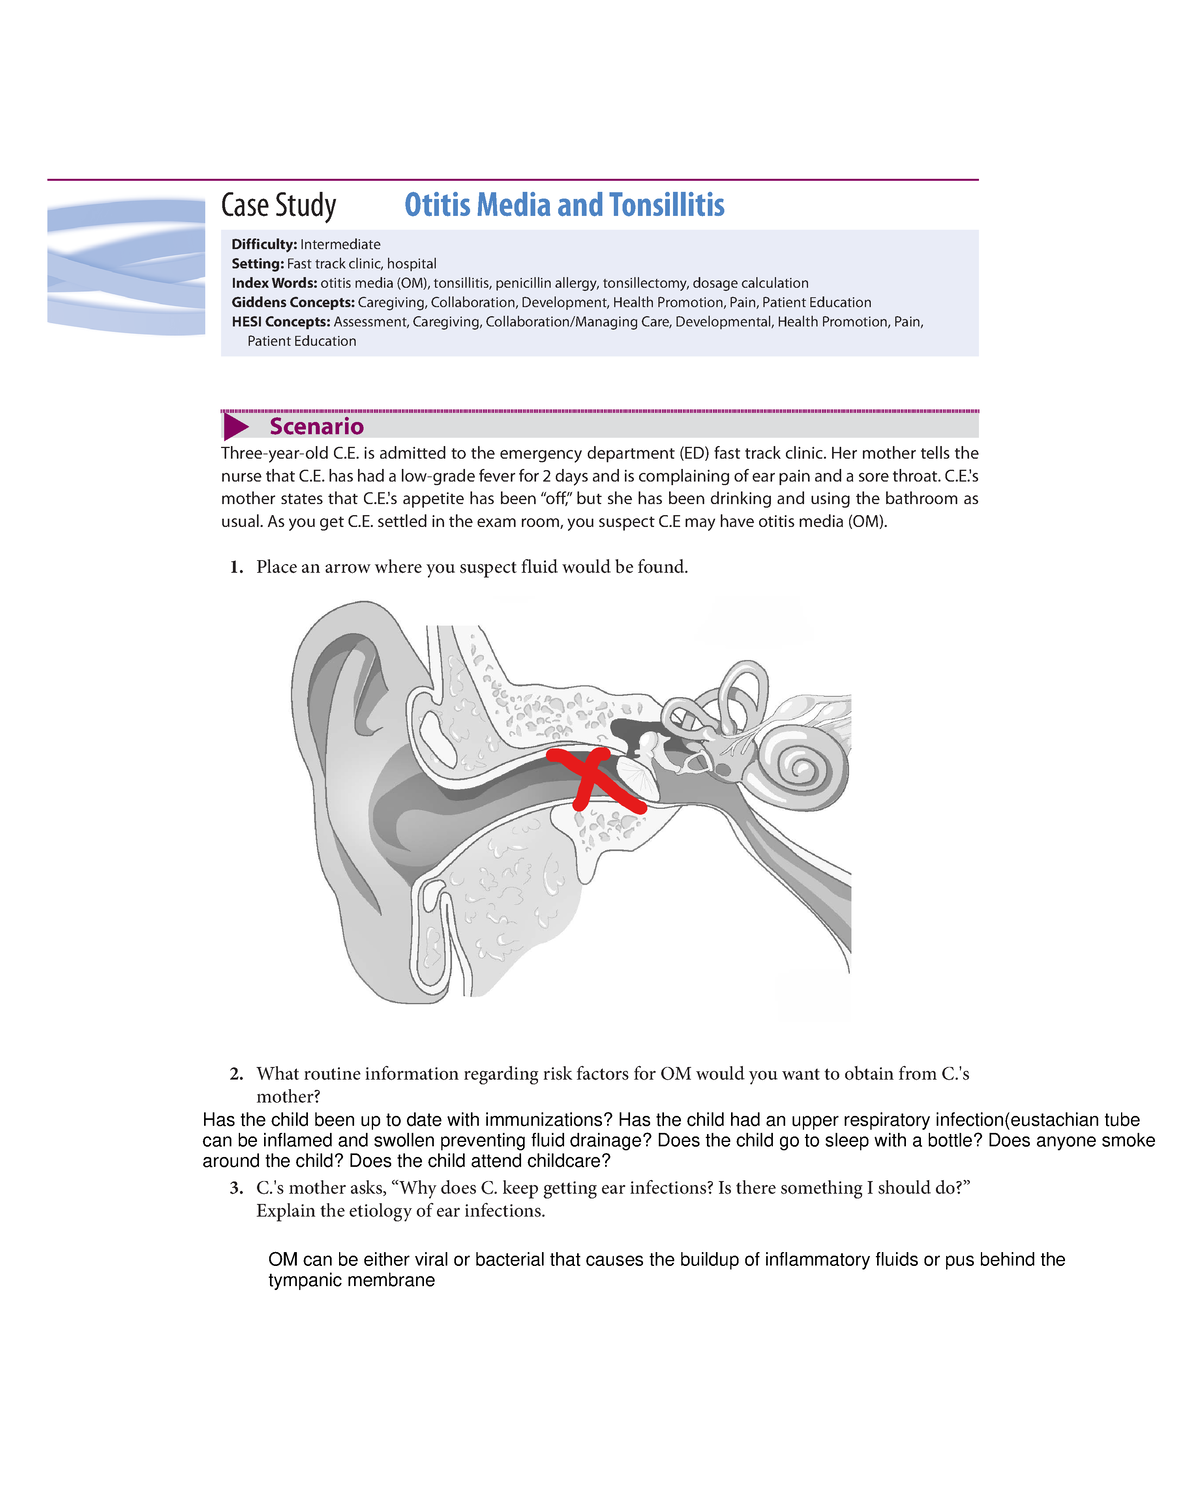 a case study on tonsillitis